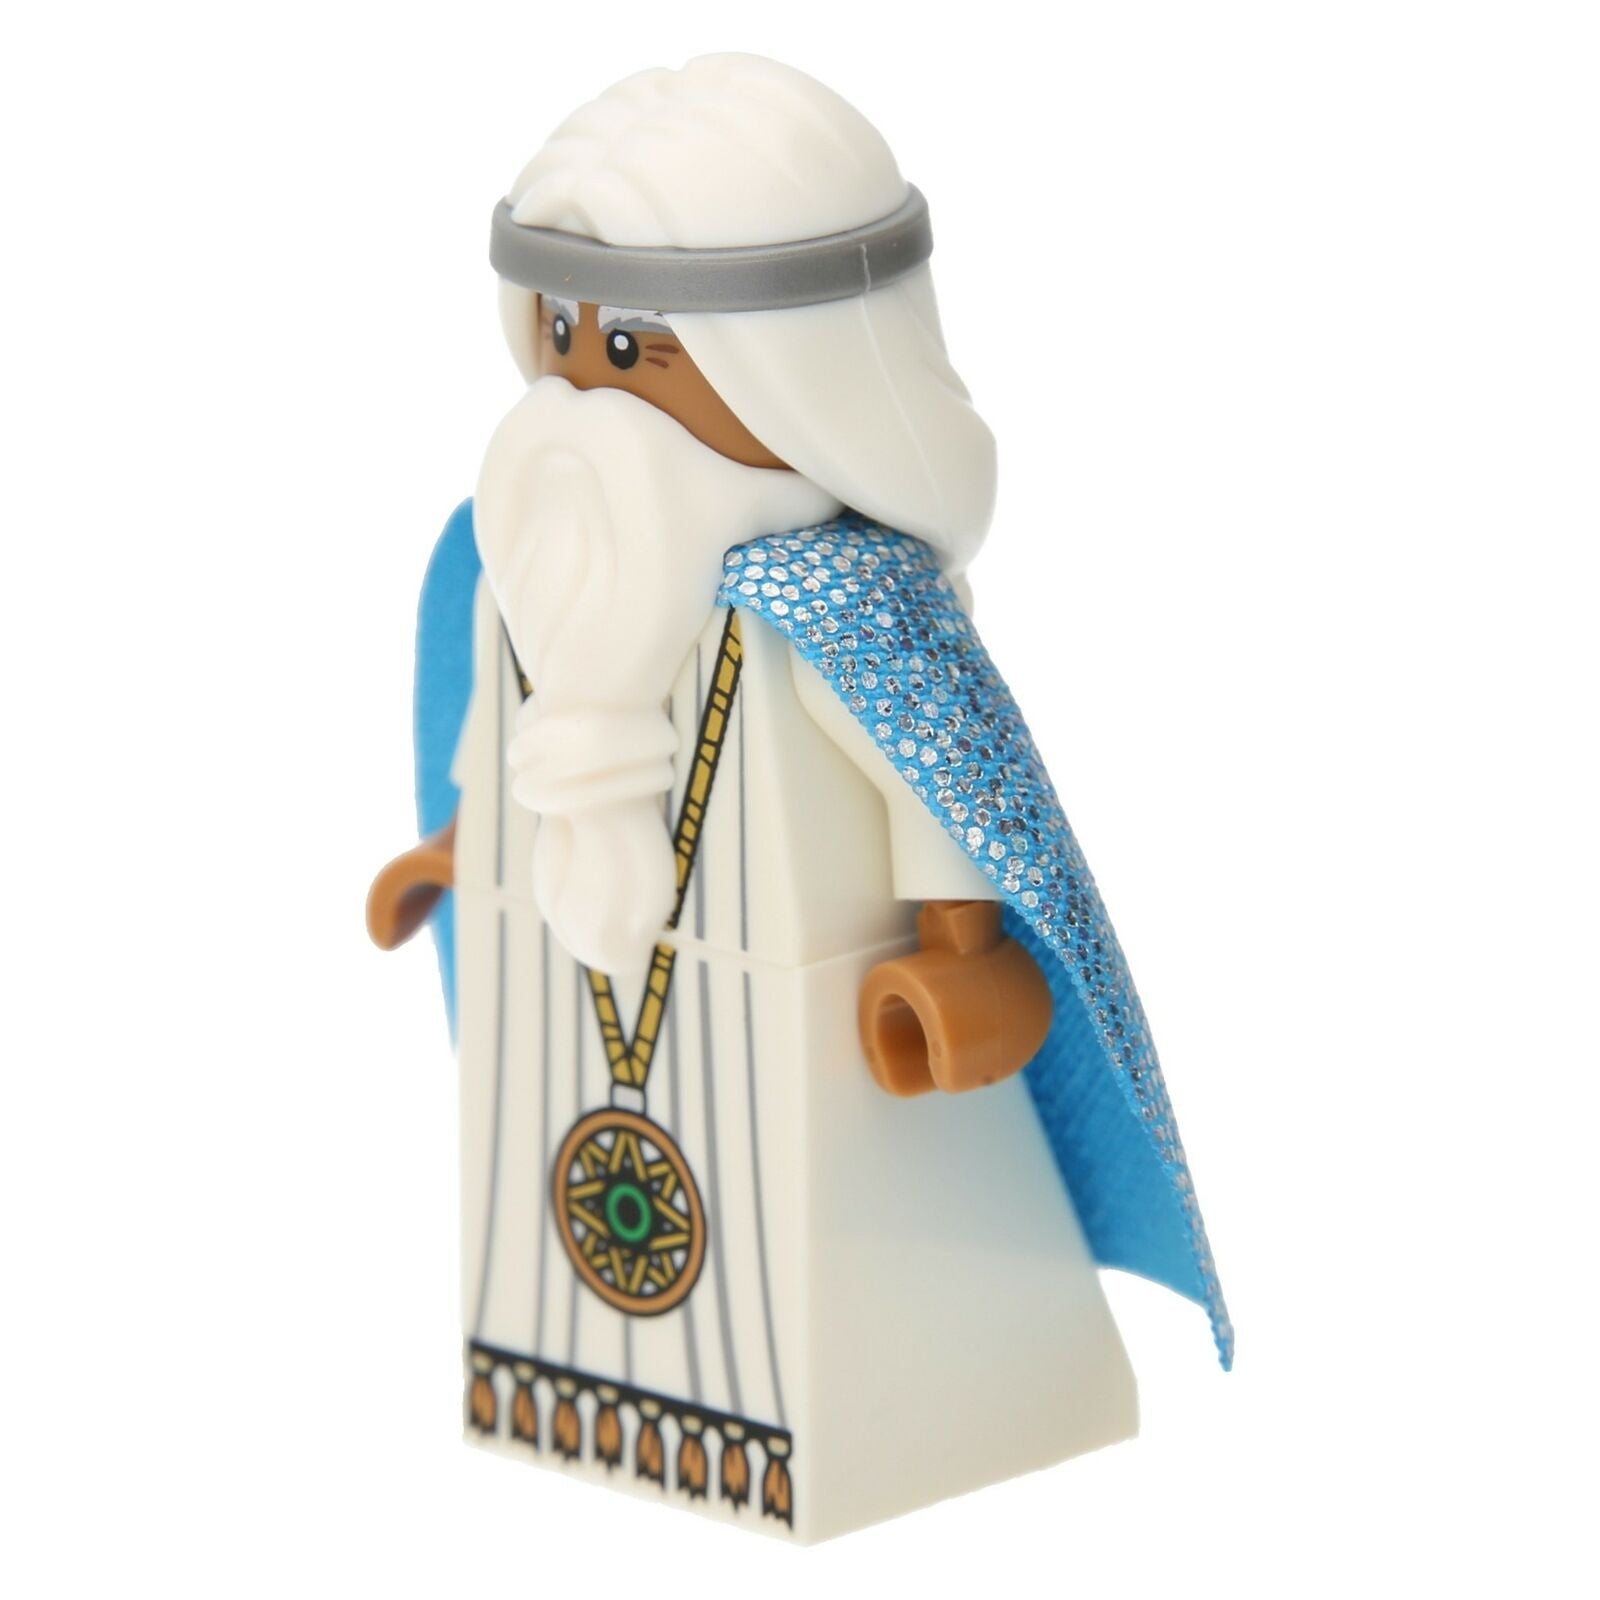 Lego the Lego Movie Minifigur - Vitruvius with a beard and cloak (medallion)